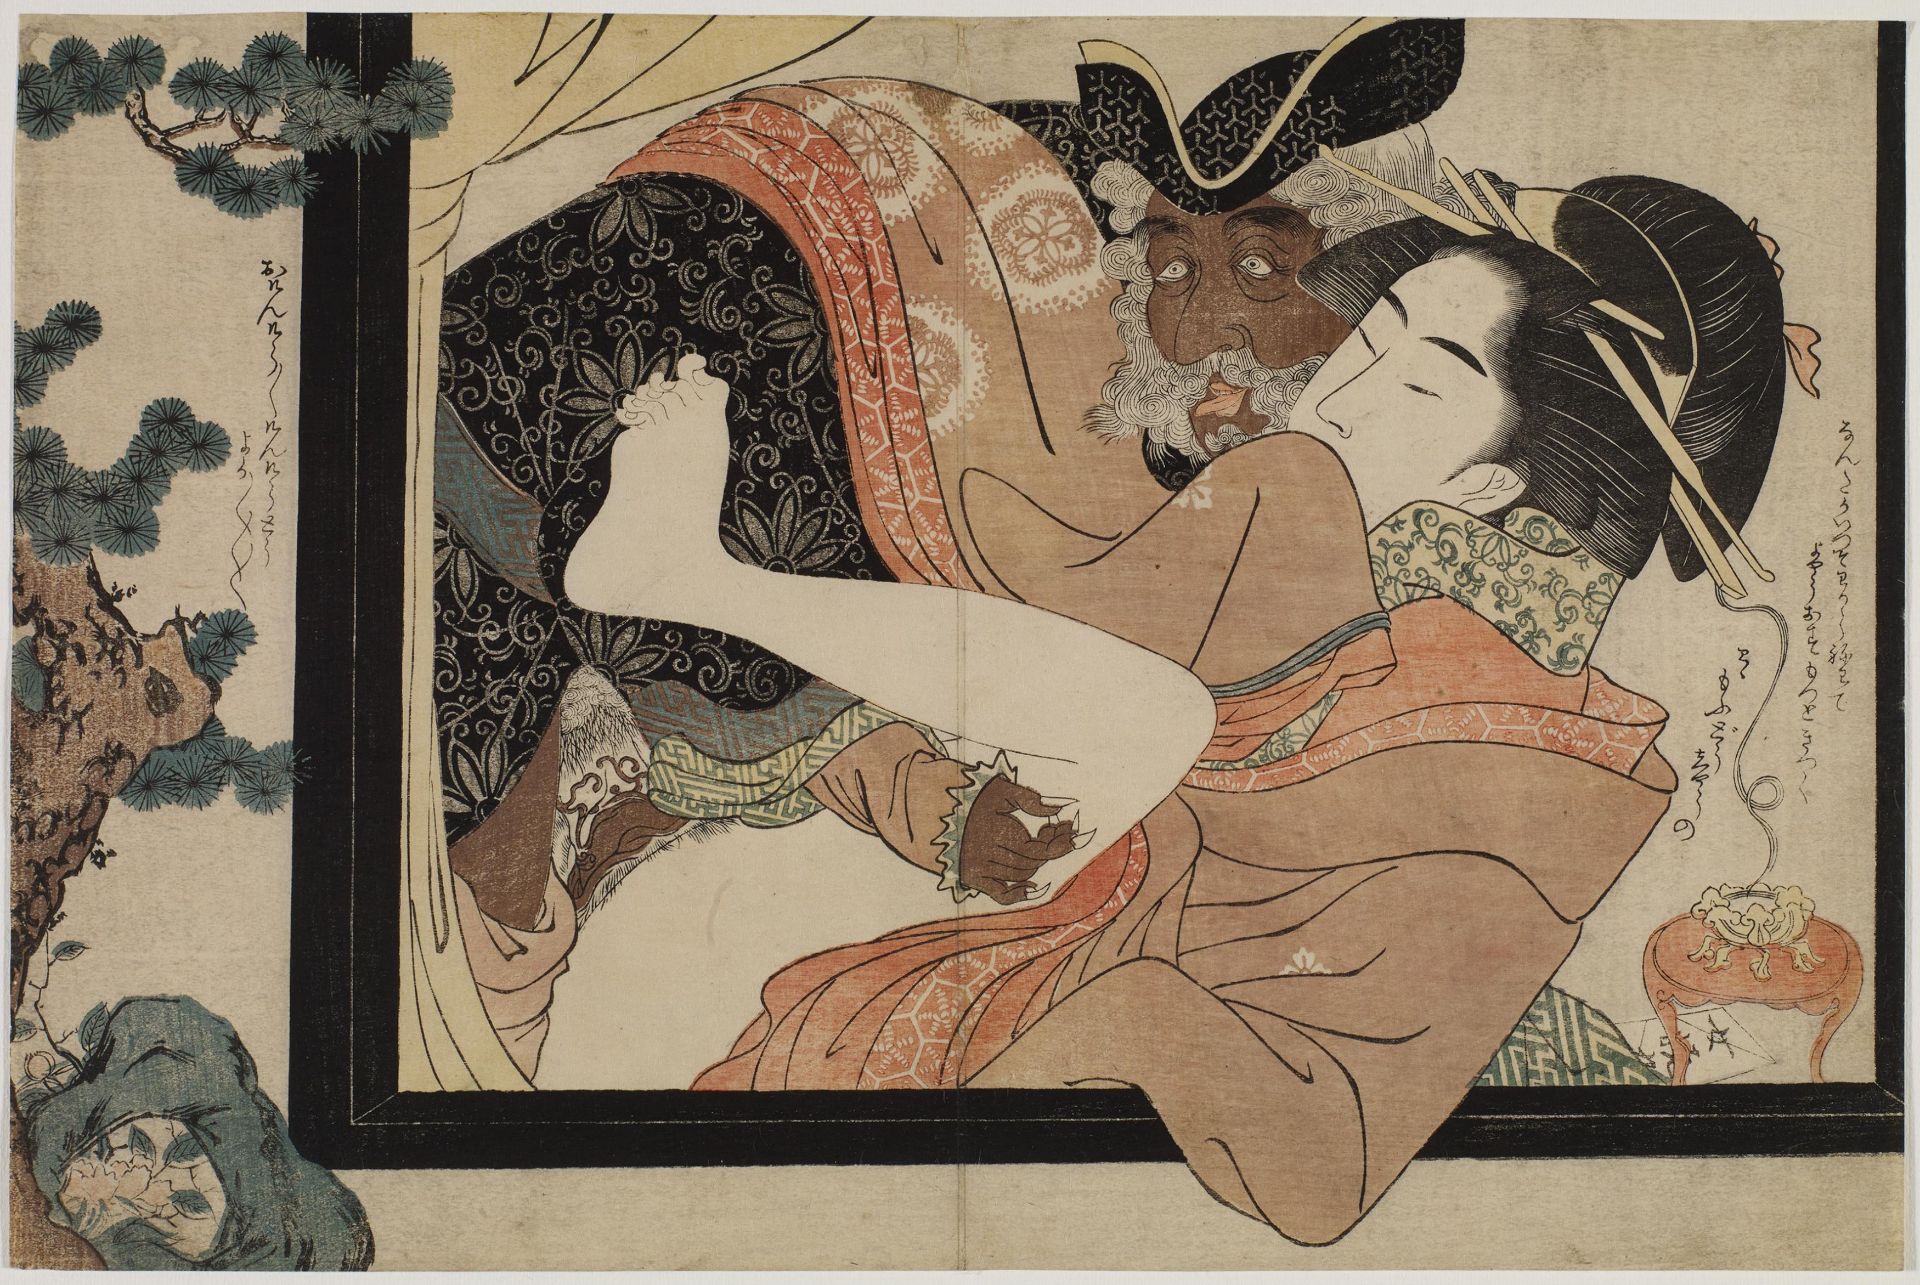 13 Blätter der Shunga-Serie "Fumi no kiyogaki" - Image 8 of 27